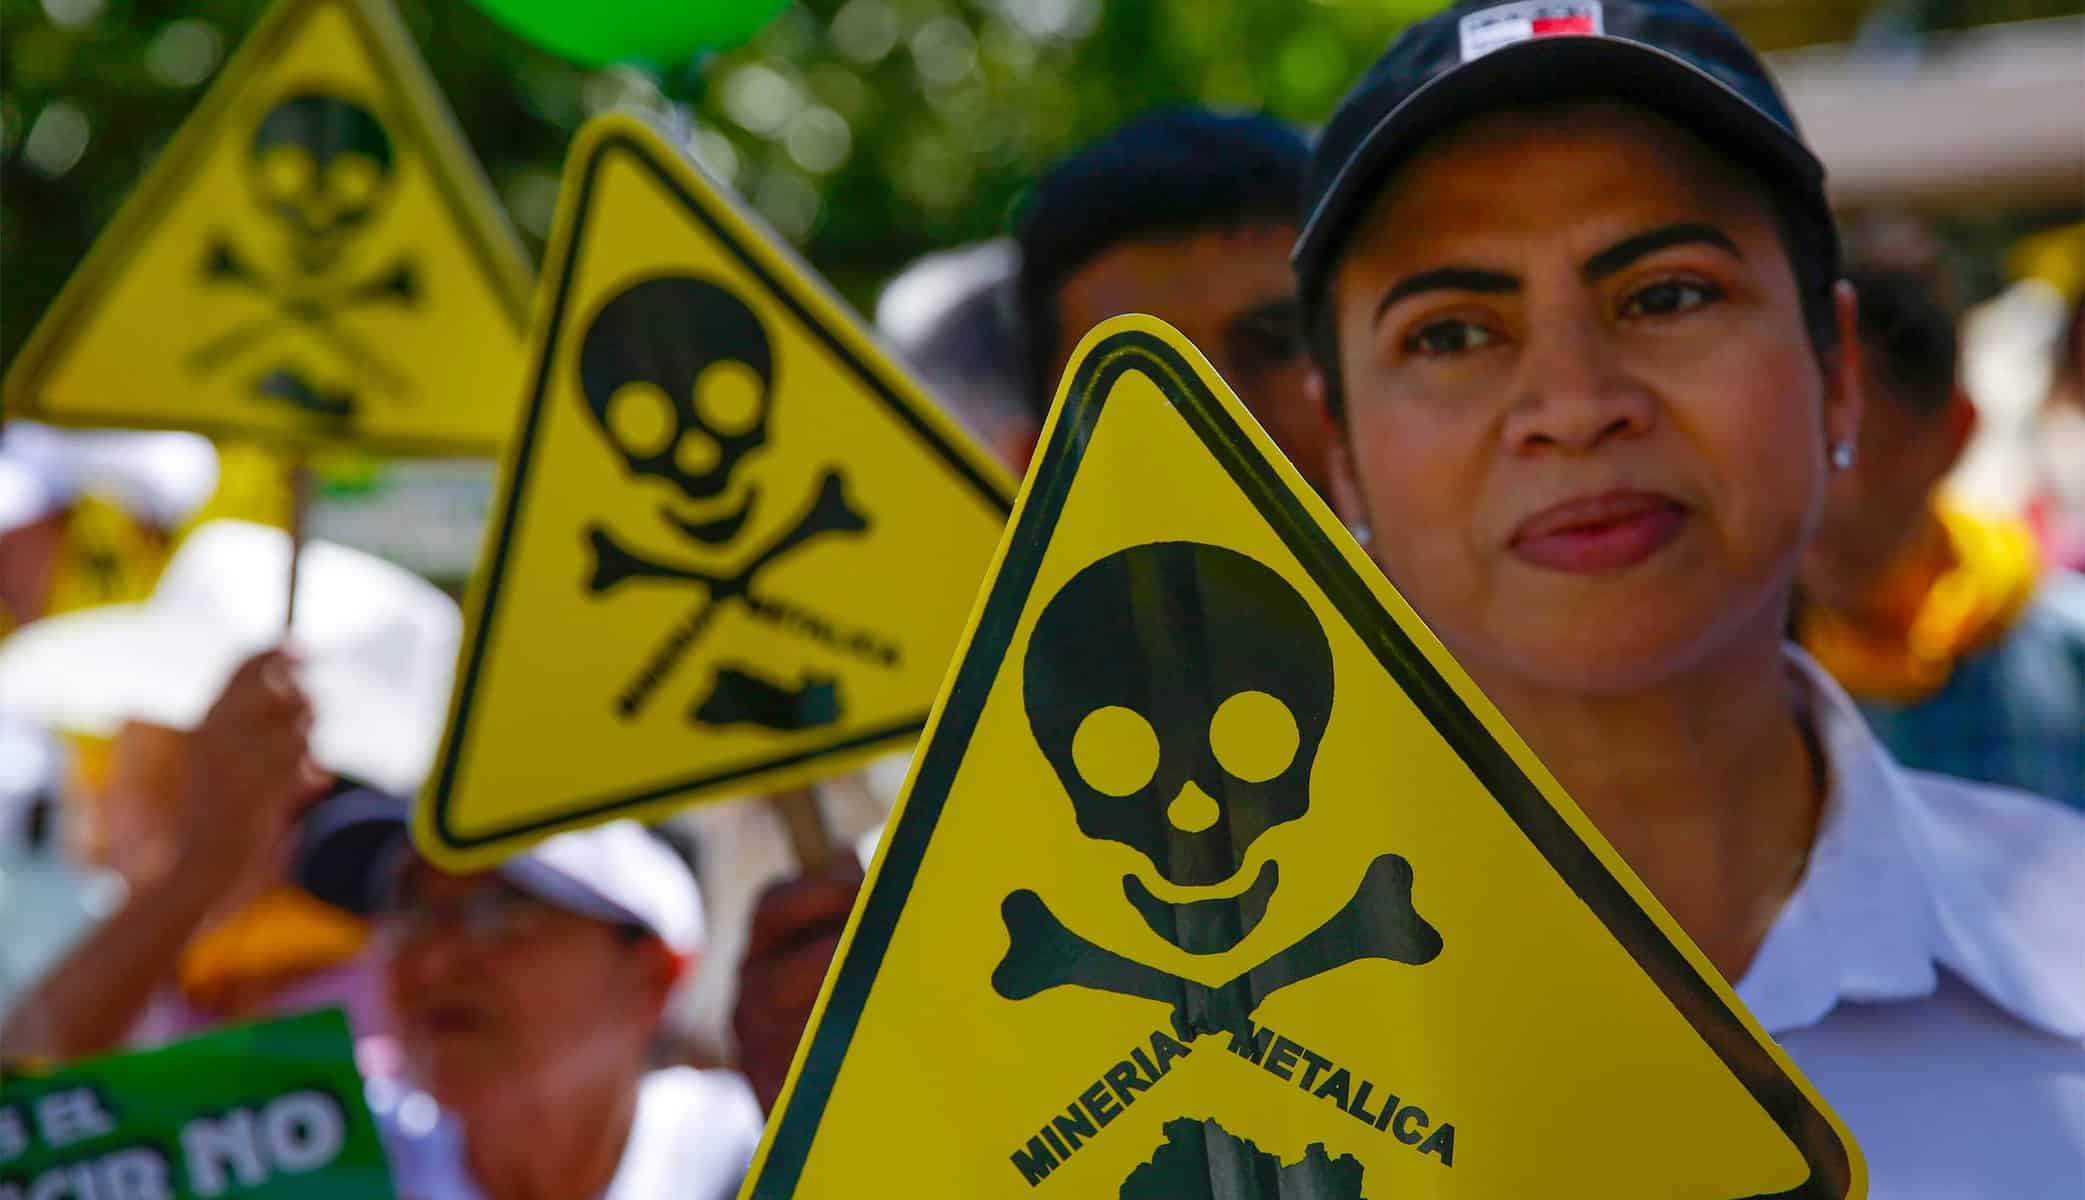 Choosing water over gold: El Salvador bans metallic mining